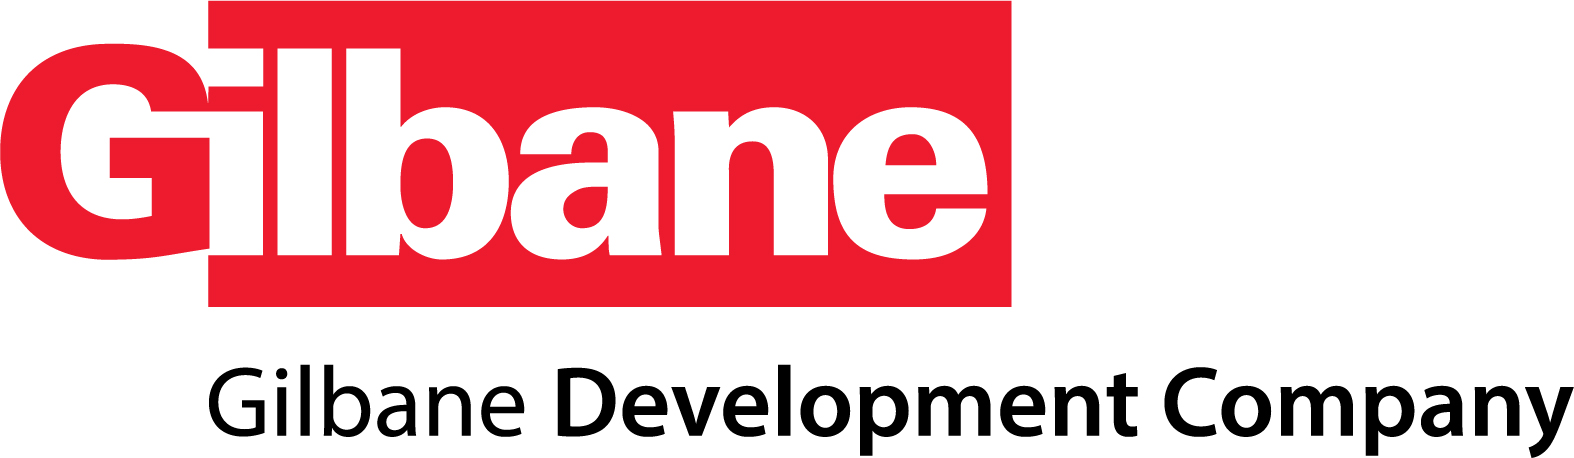 Gilbane Development Company LEFT